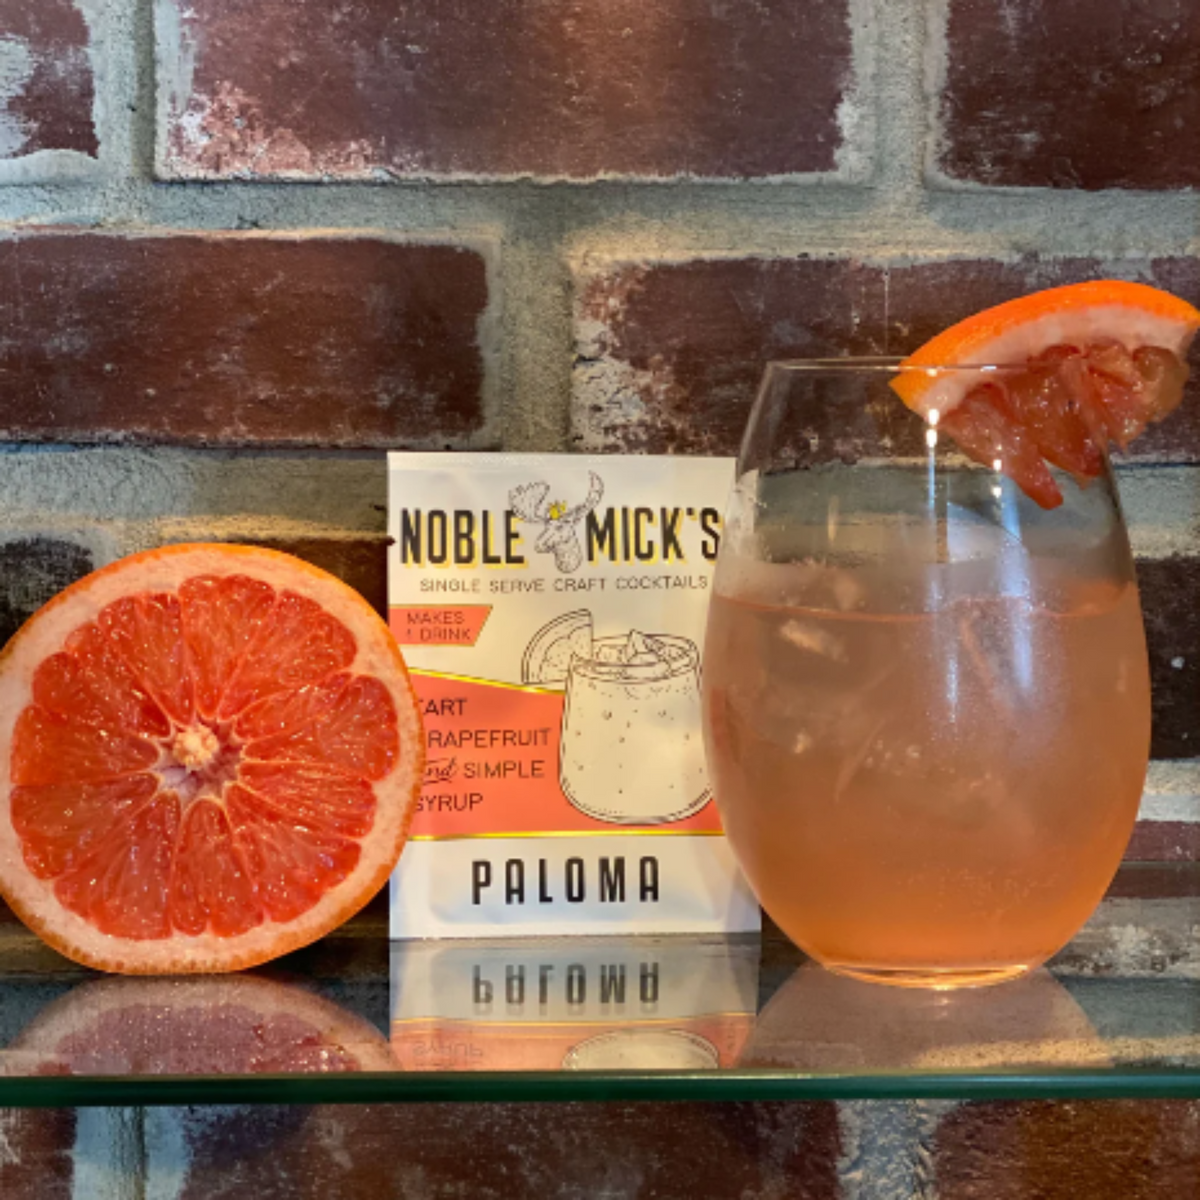 Paloma - single serve craft cocktails